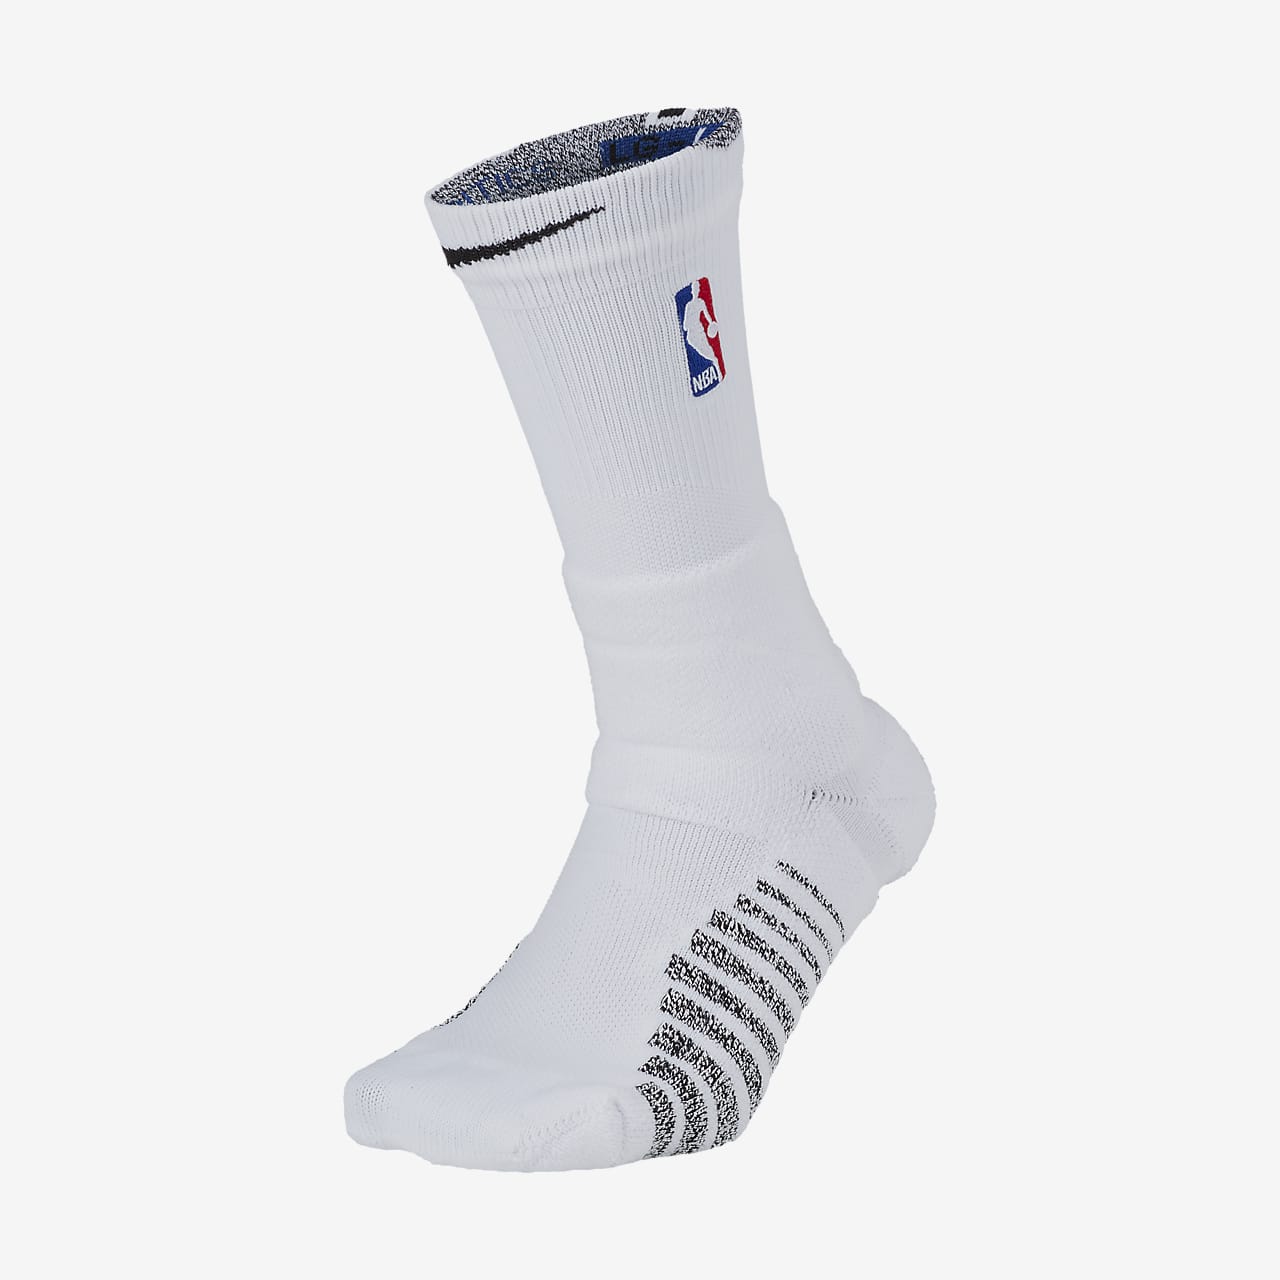 nike grip power crew basketball socks